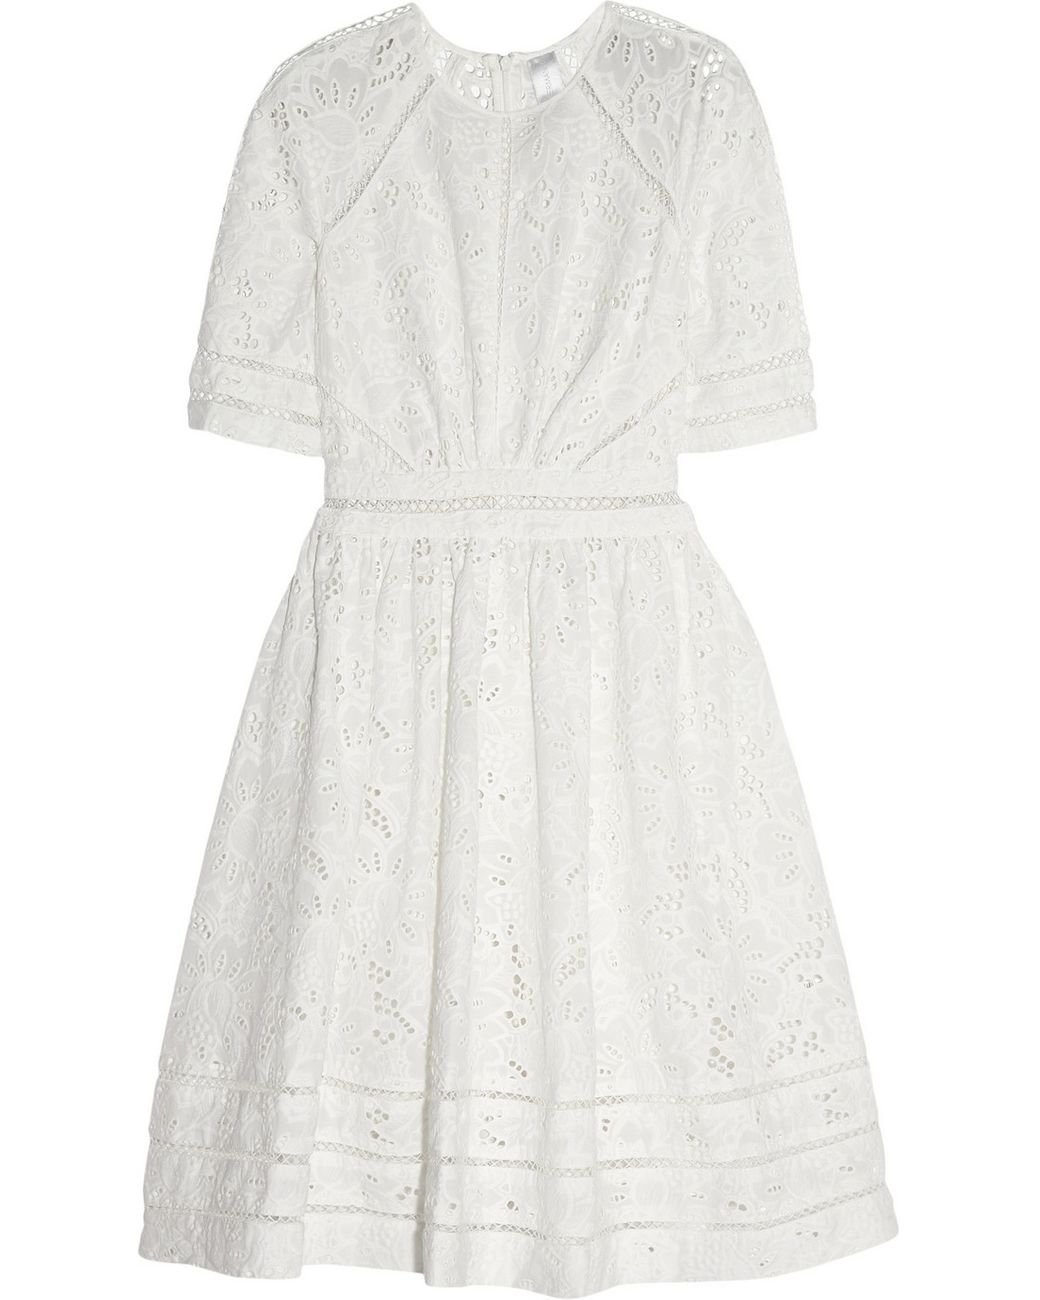 Zimmermann Roamer Broderie Anglaise Cotton Dress in White | Lyst